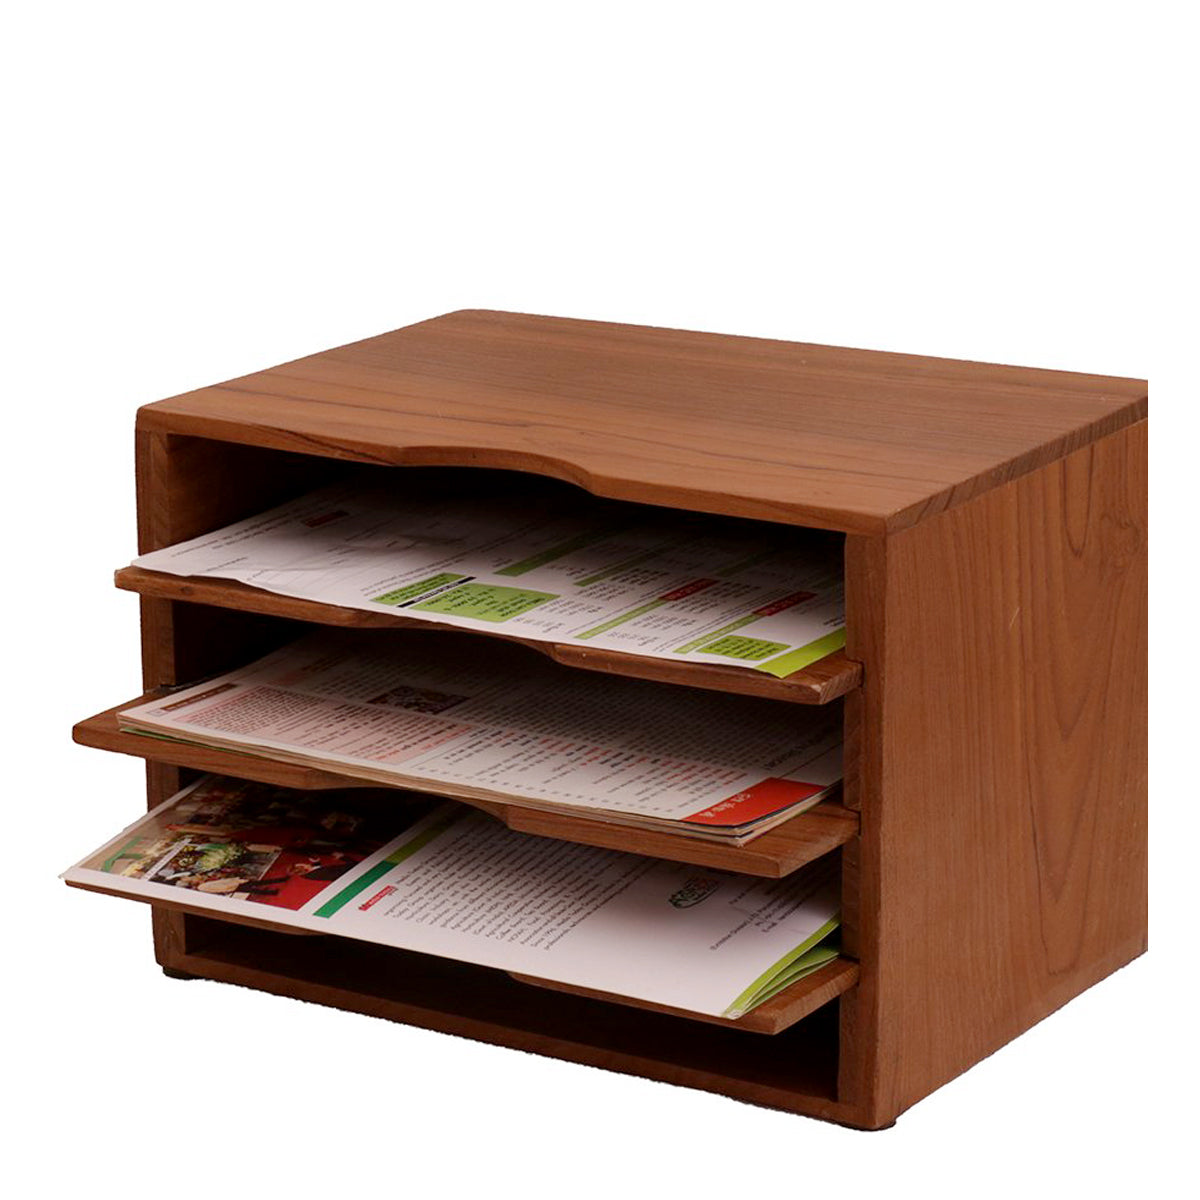 Horizontal Wooden Paper Rack (Natural Tone) Desk Organizer